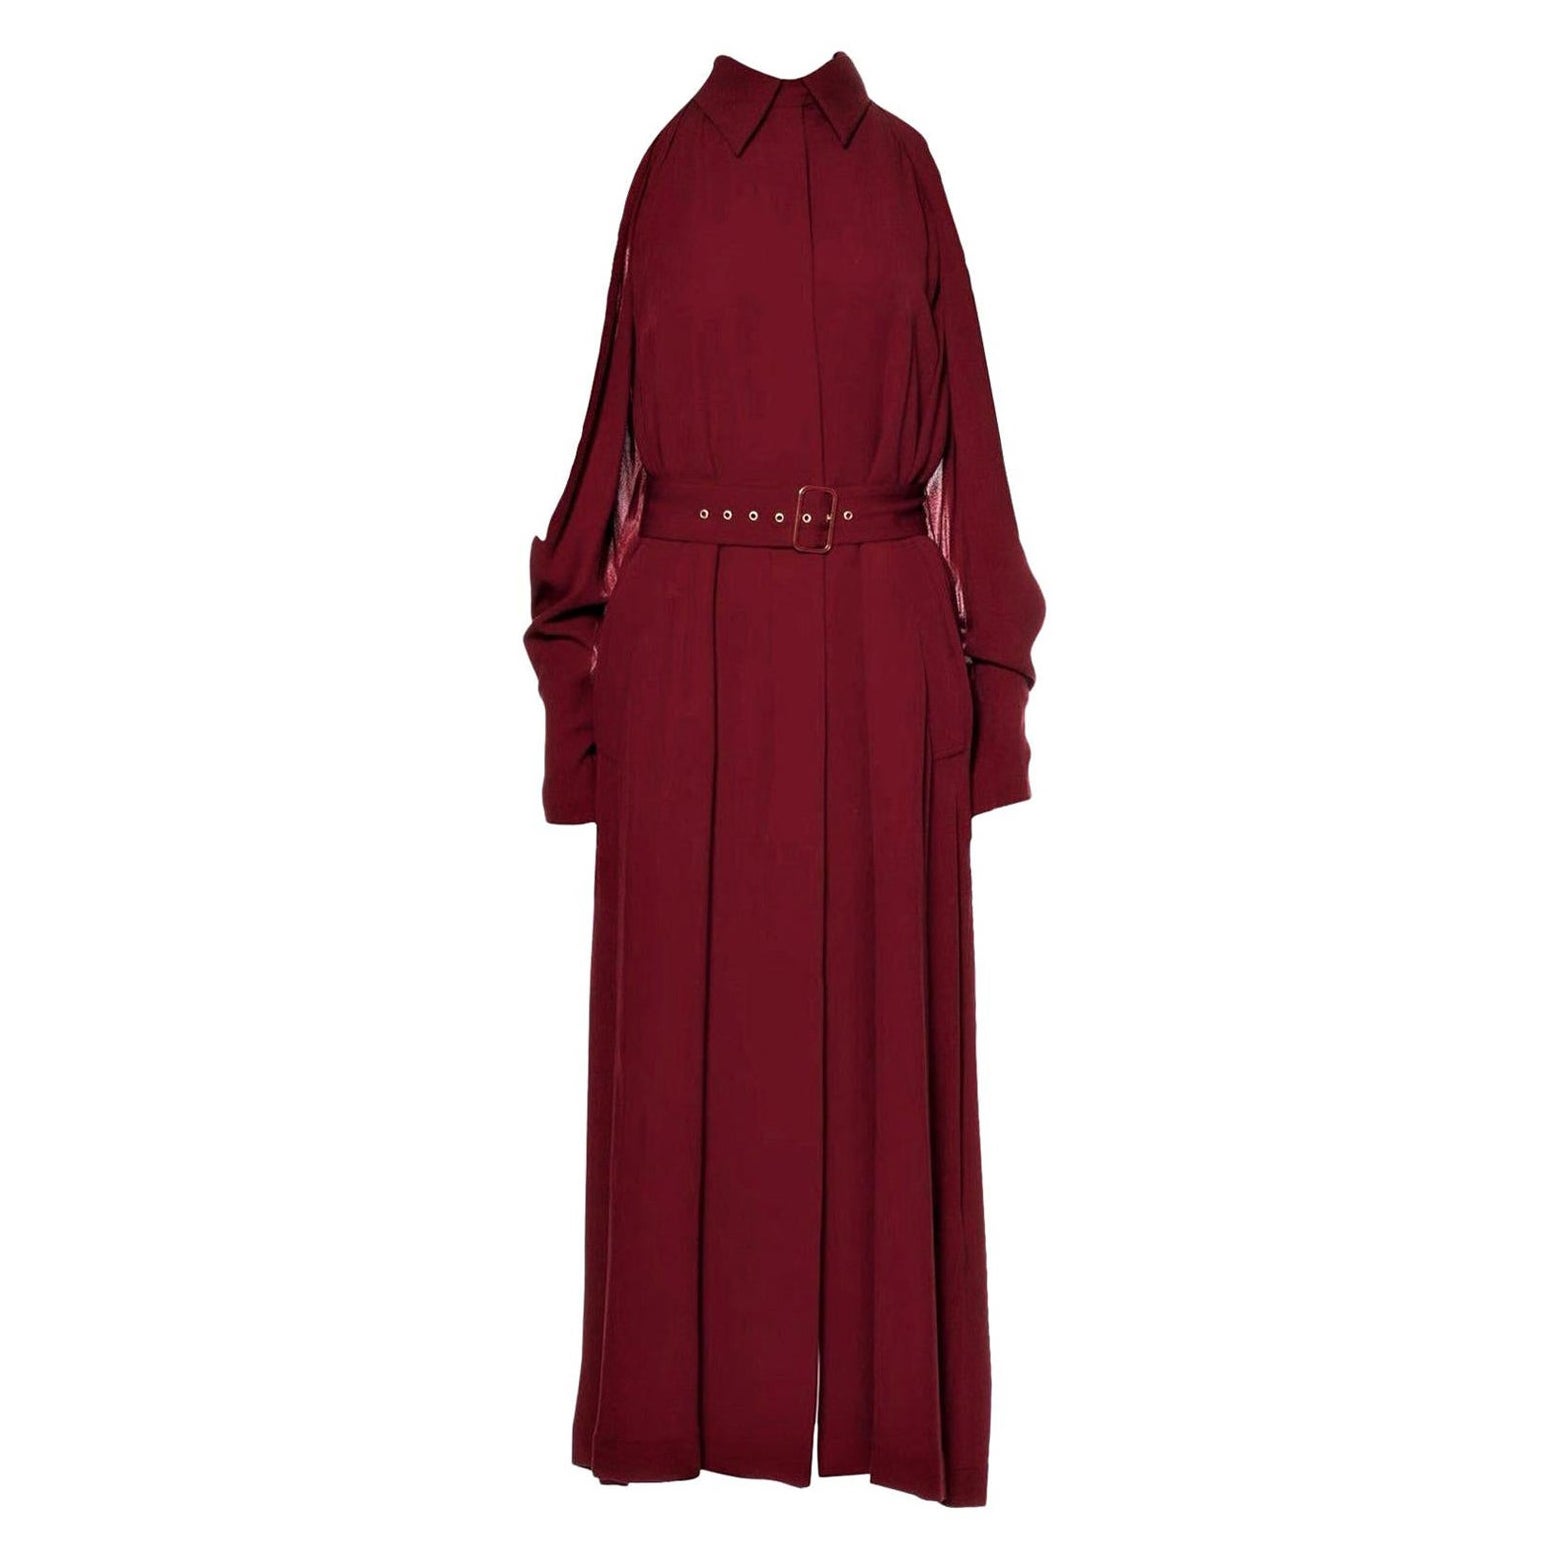 New Rare Salvatore Ferragamo Red Silk Dress F/W 2018  With Tags $3200 Sz 42